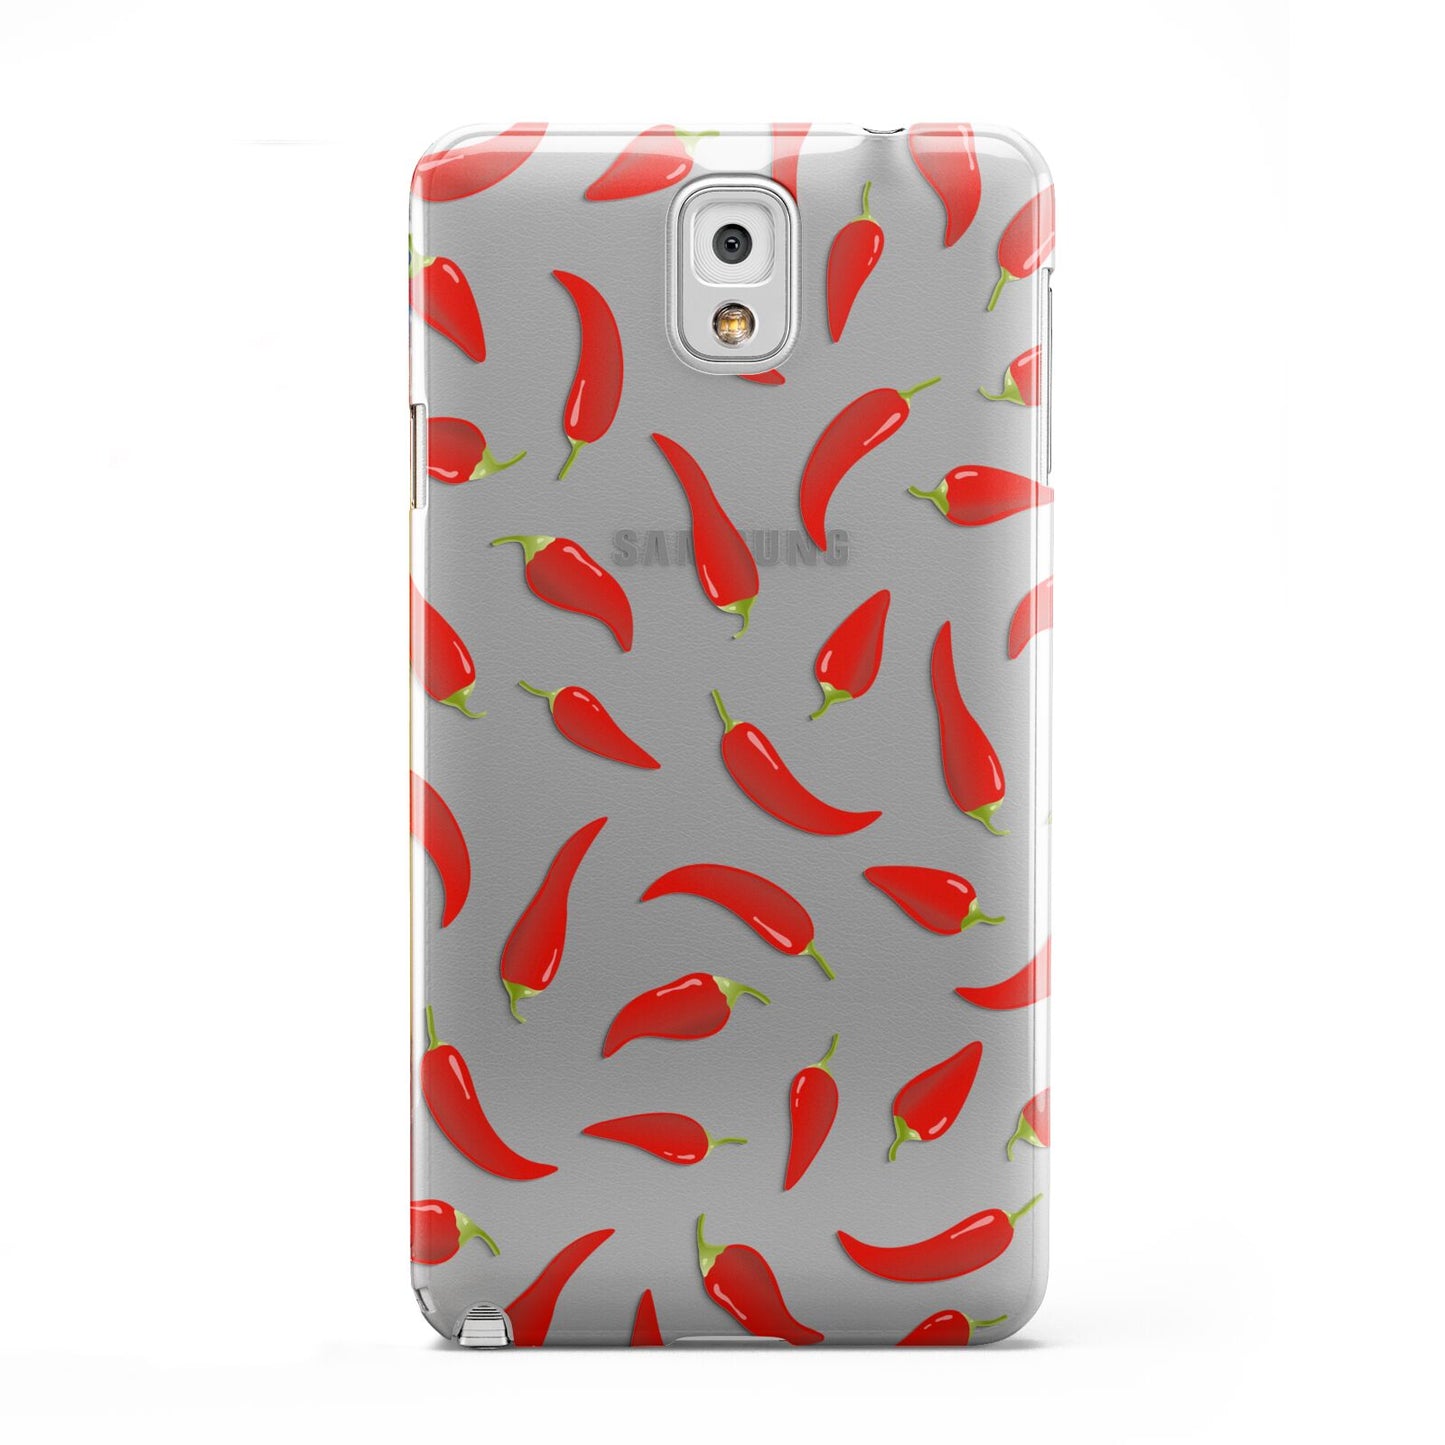 Chilli Pepper Samsung Galaxy Note 3 Case